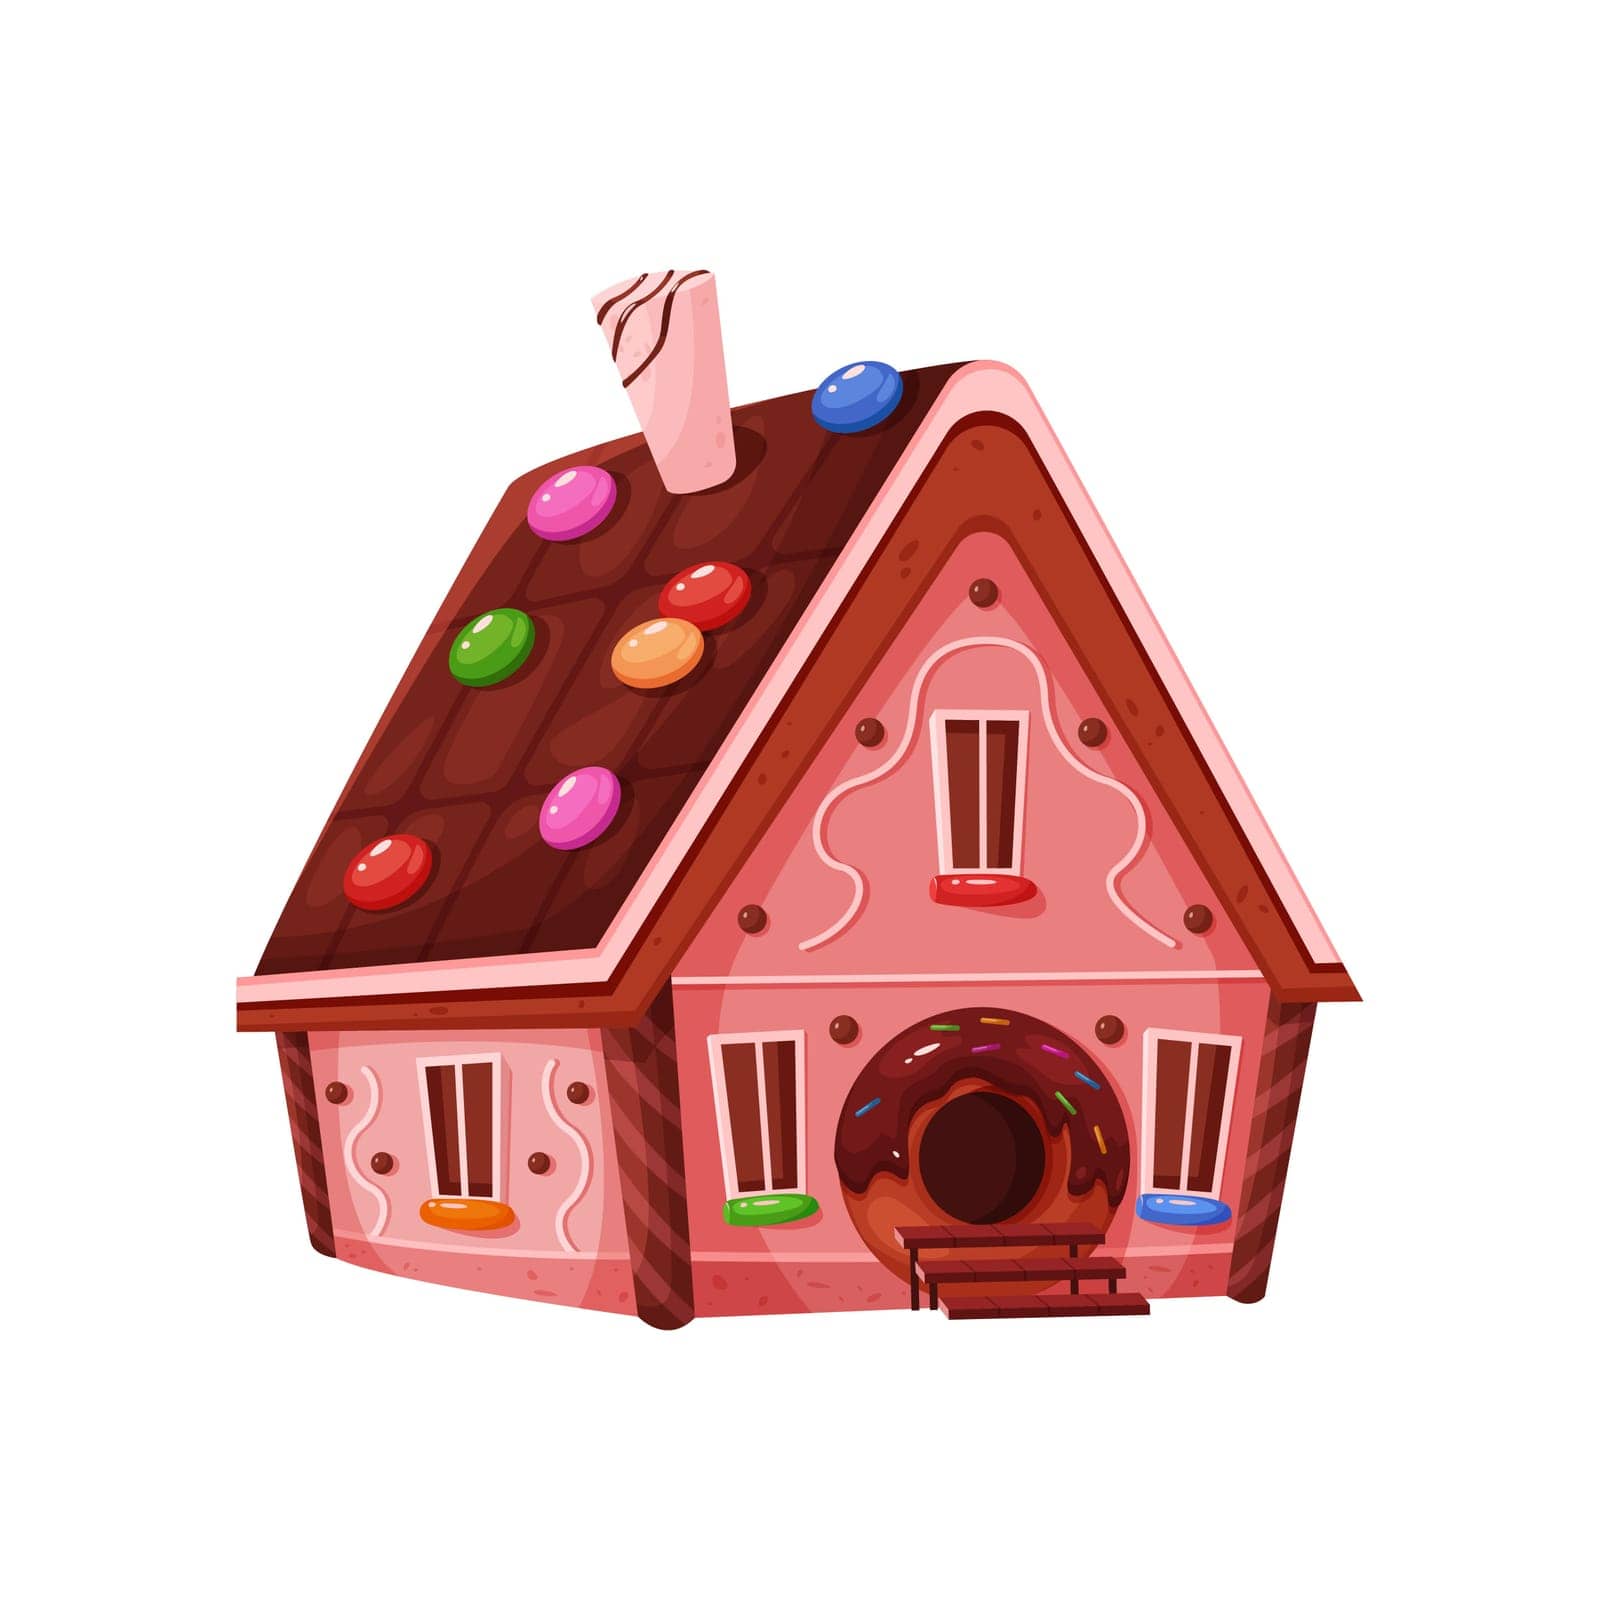 Fairy candy home by Popov